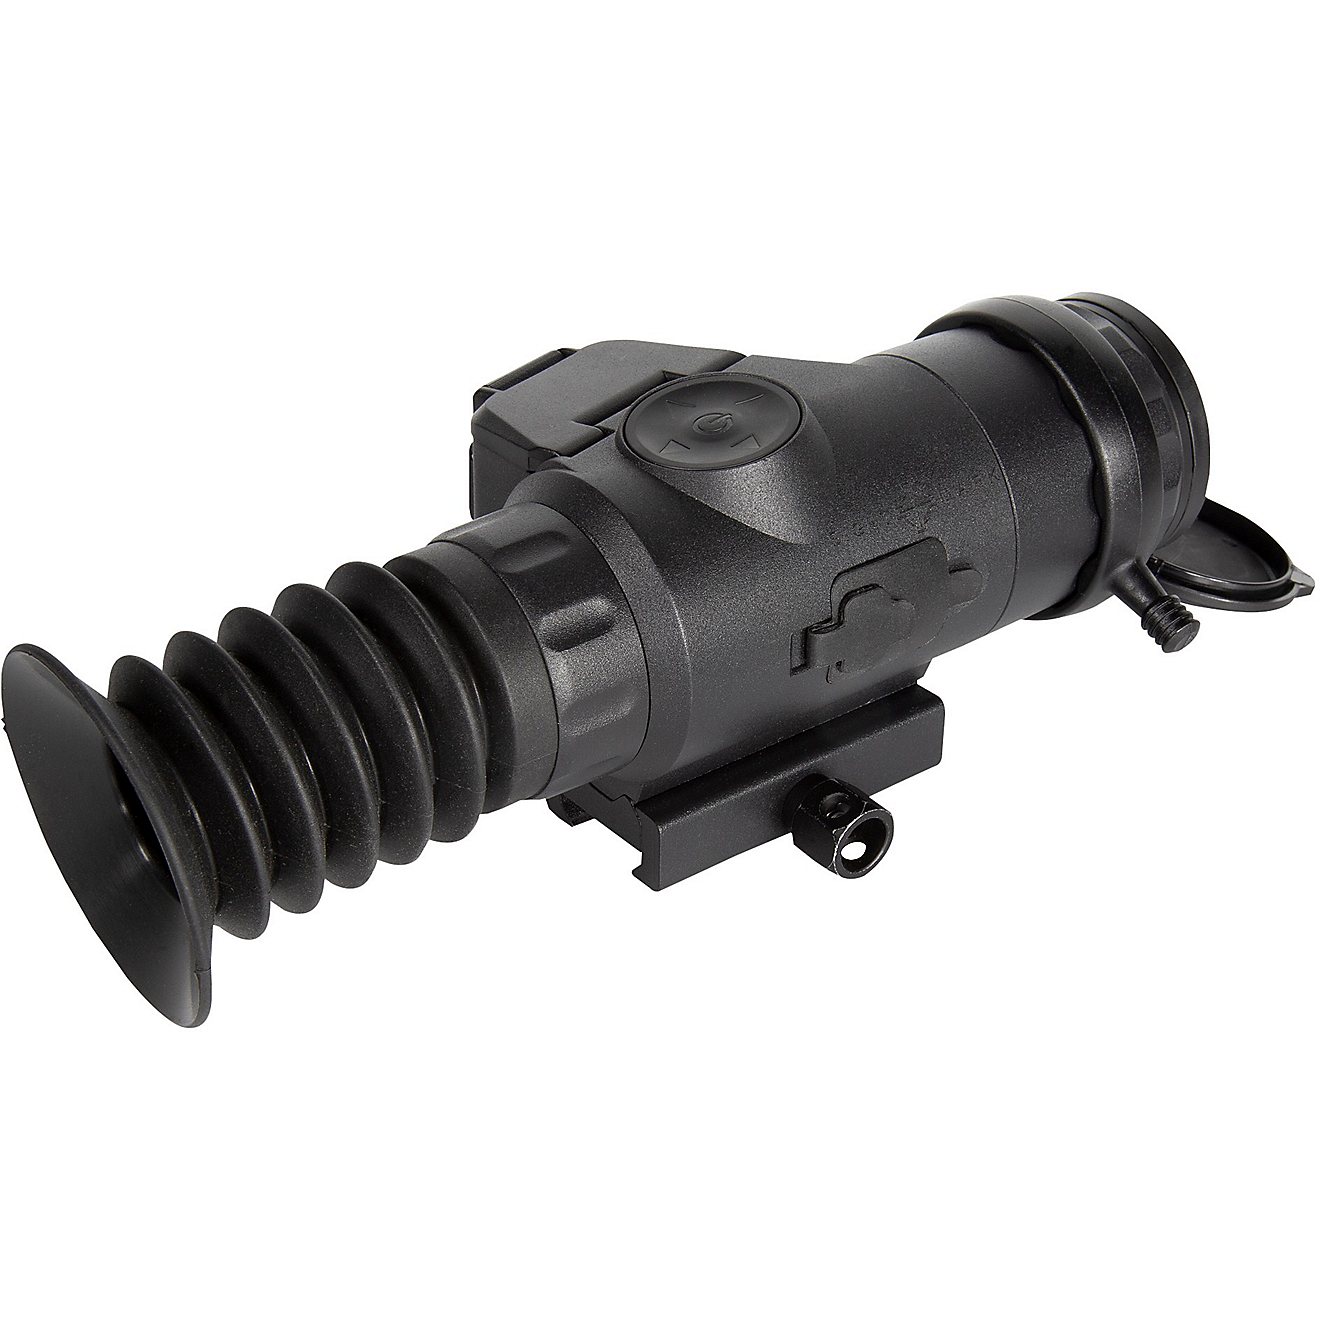 Sightmark Wraith 4K Mini 2x Digital Night Vision Riflescope                                                                      - view number 3